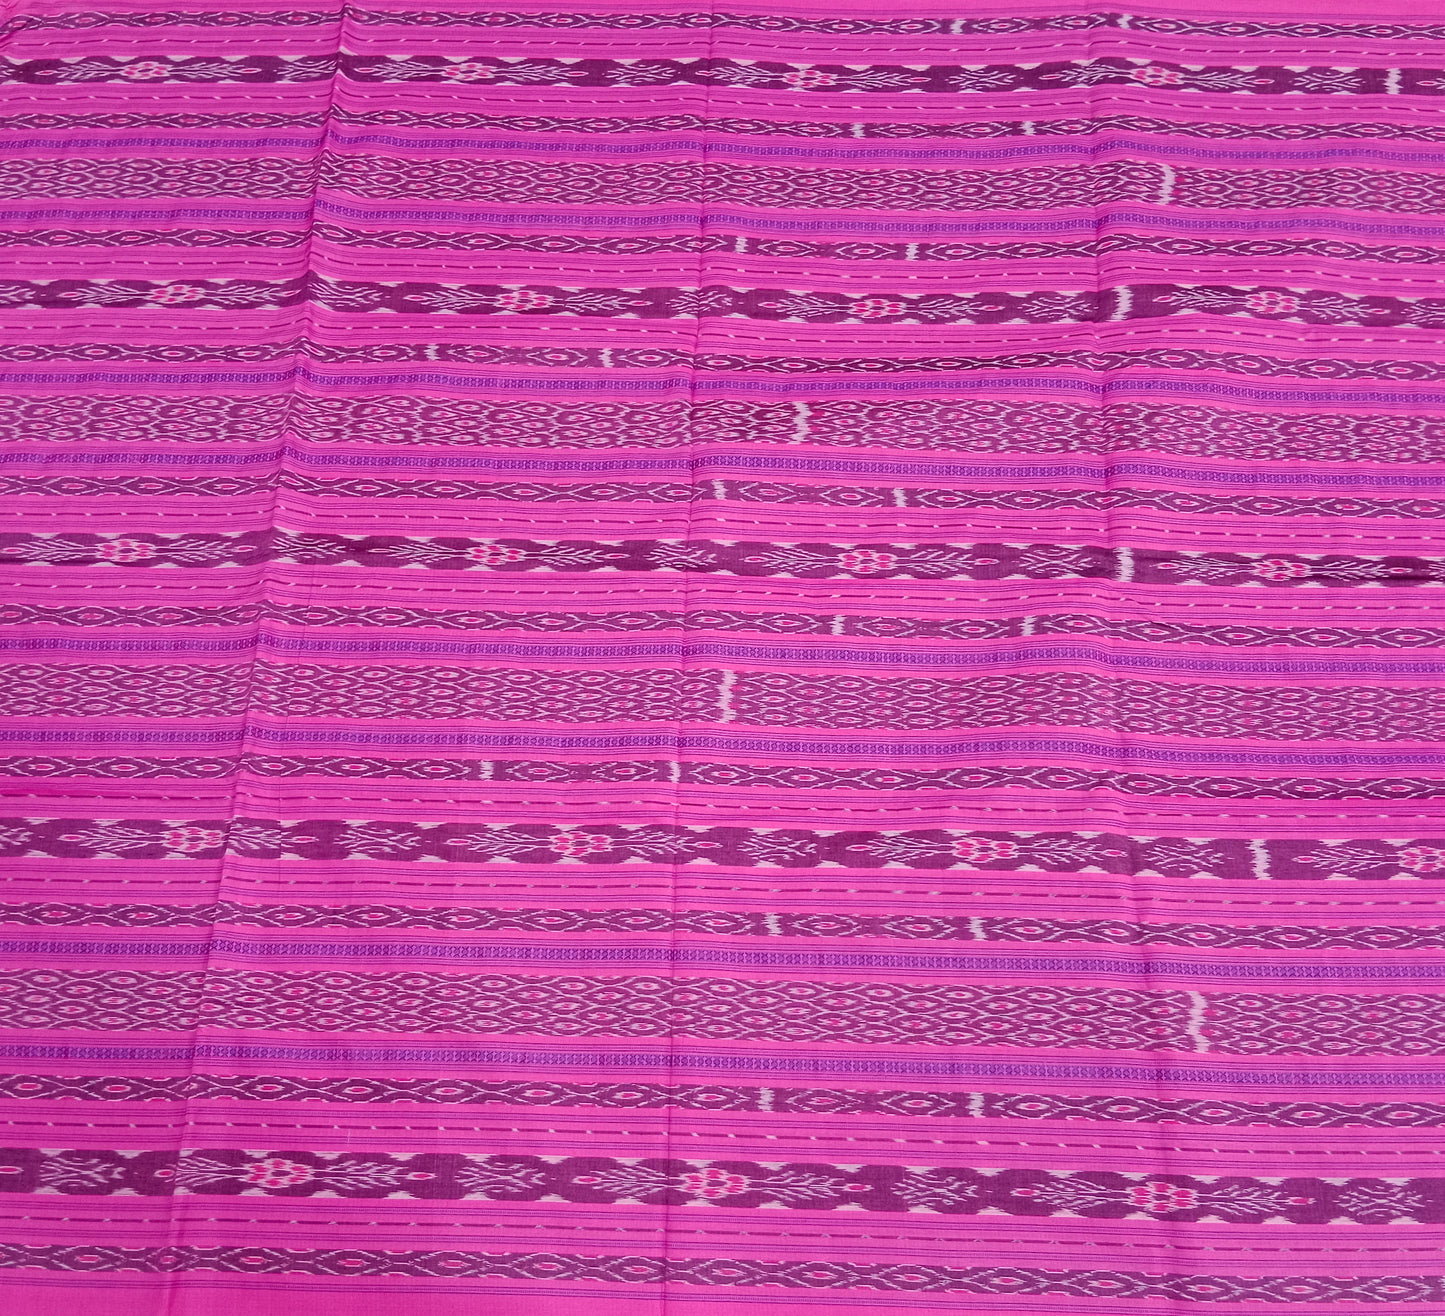 Pink tree ikat fabric